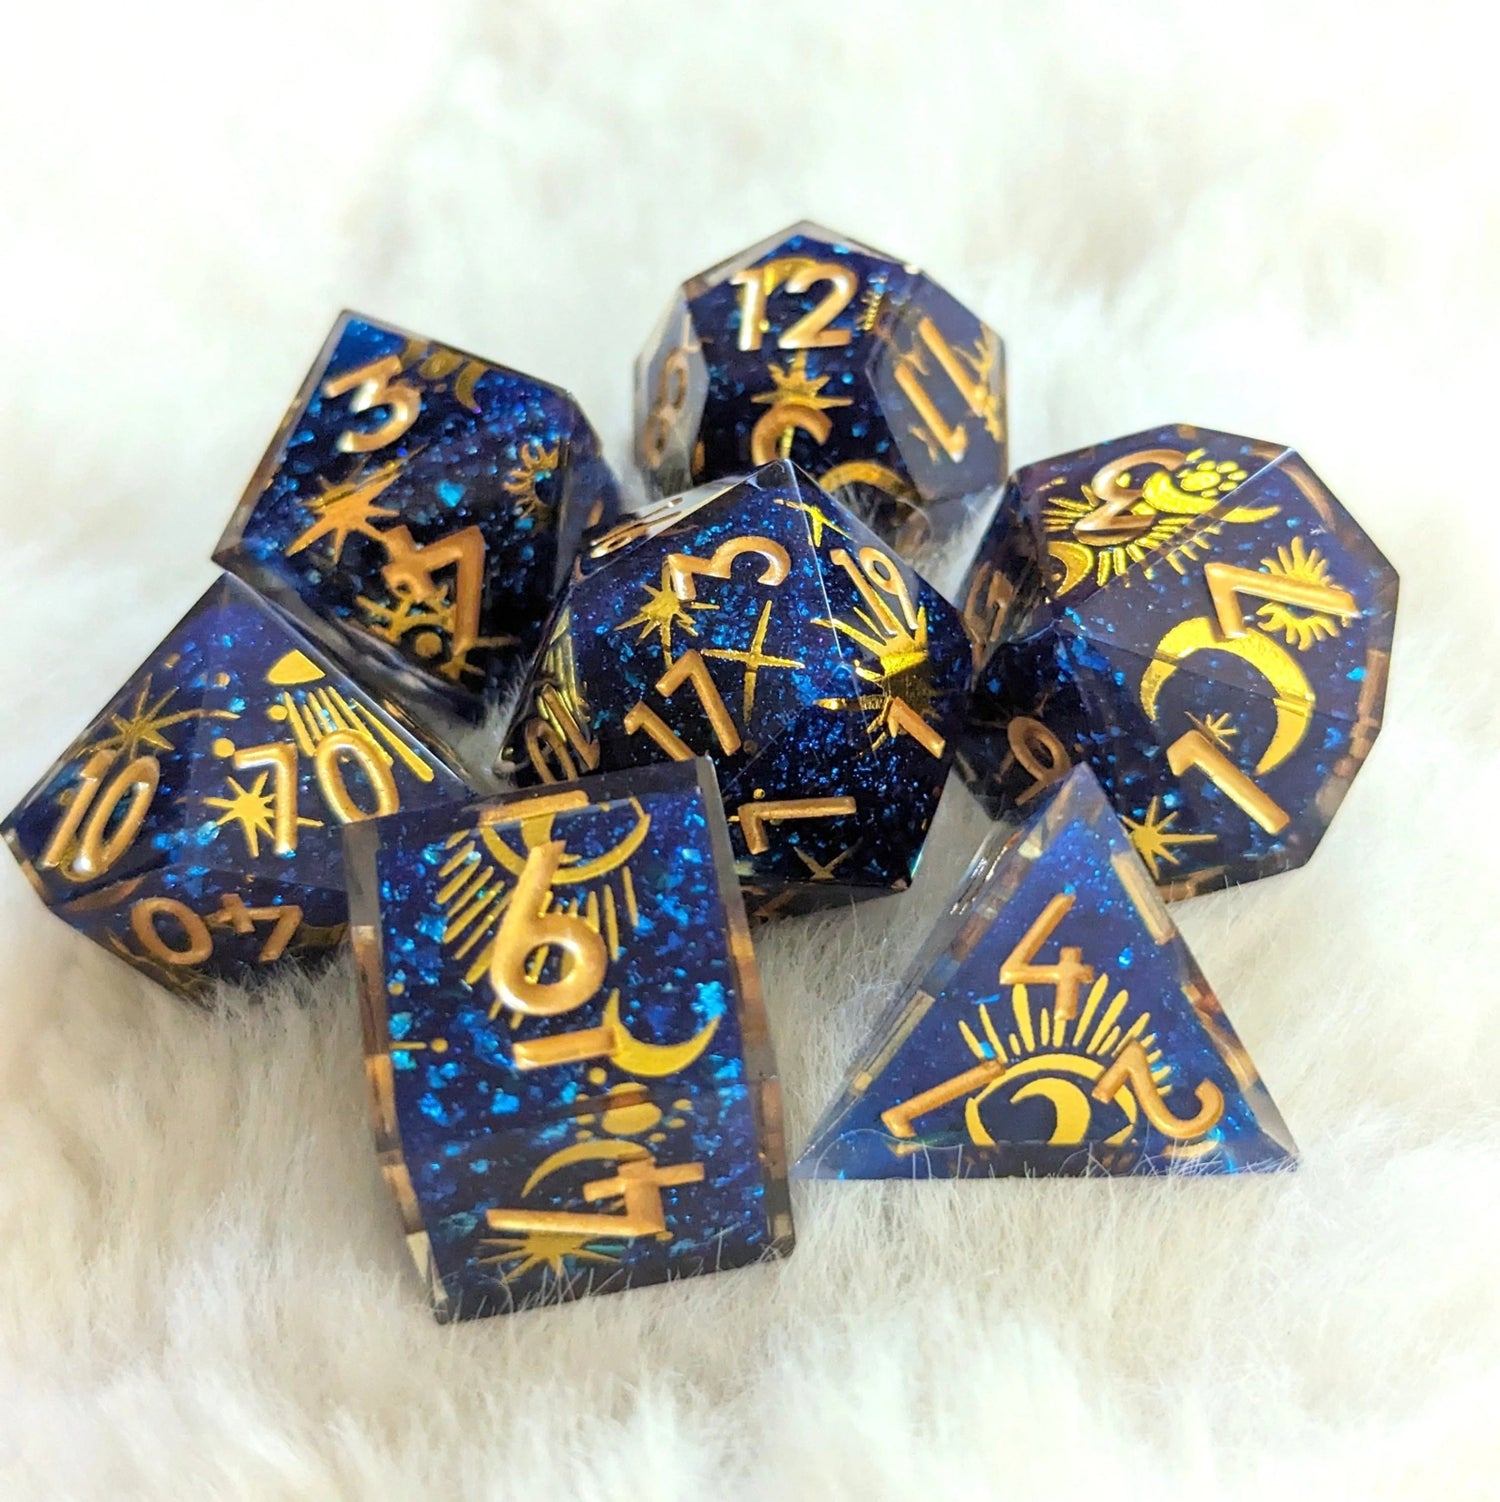 Planetary Mystic - 7 piece sharp-edge dice set - The Fourth Place